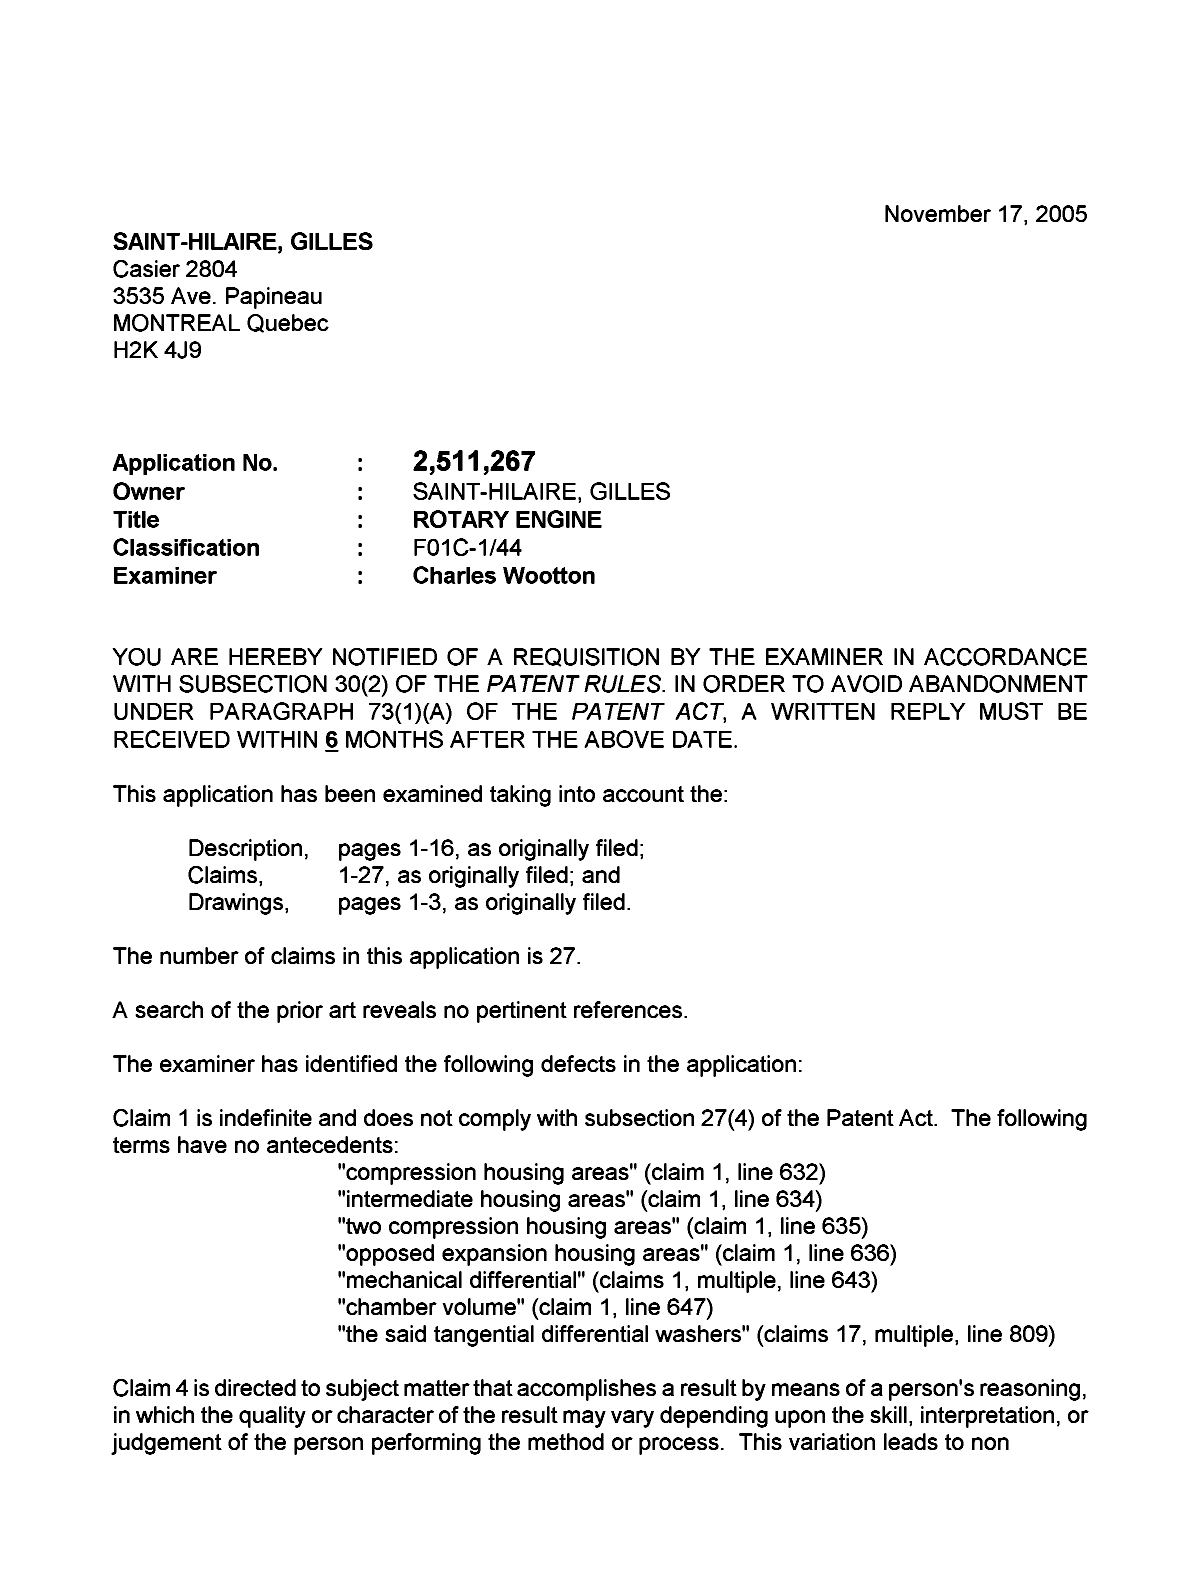 Canadian Patent Document 2511267. Prosecution-Amendment 20041217. Image 1 of 2